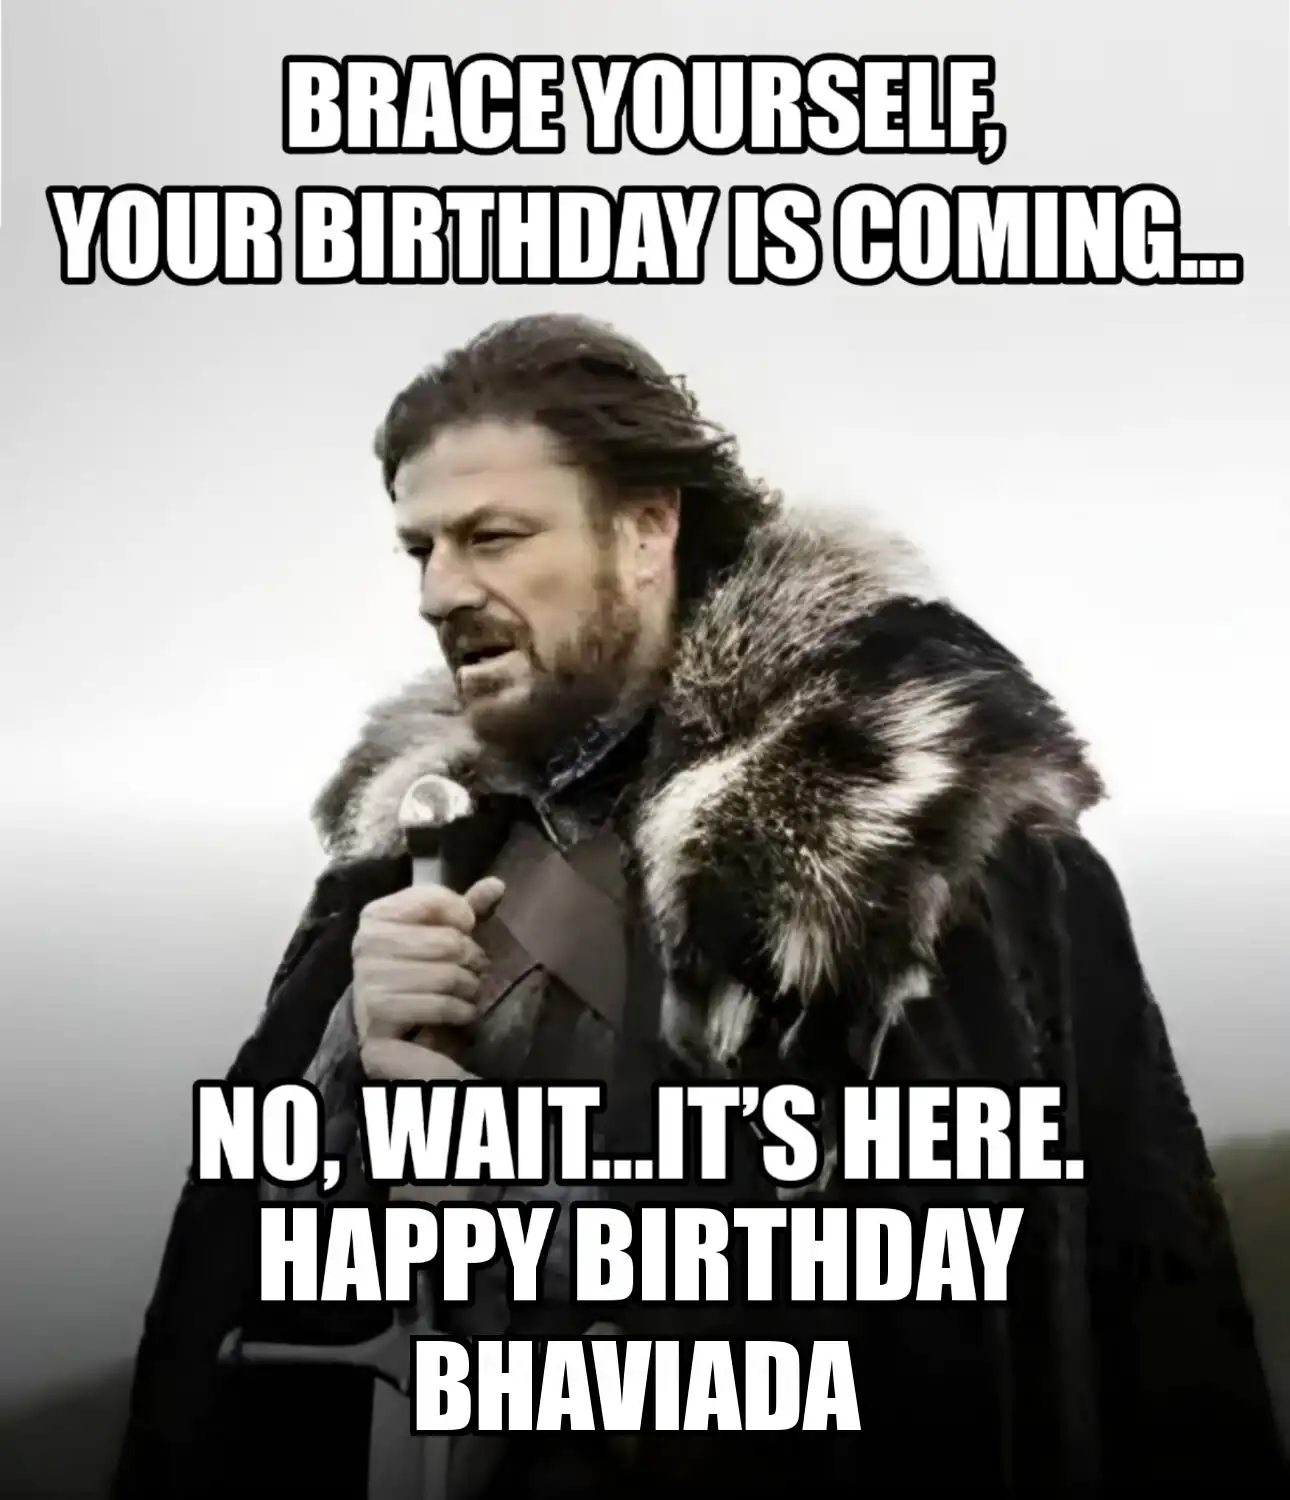 Happy Birthday Bhaviada Brace Yourself Your Birthday Is Coming Meme